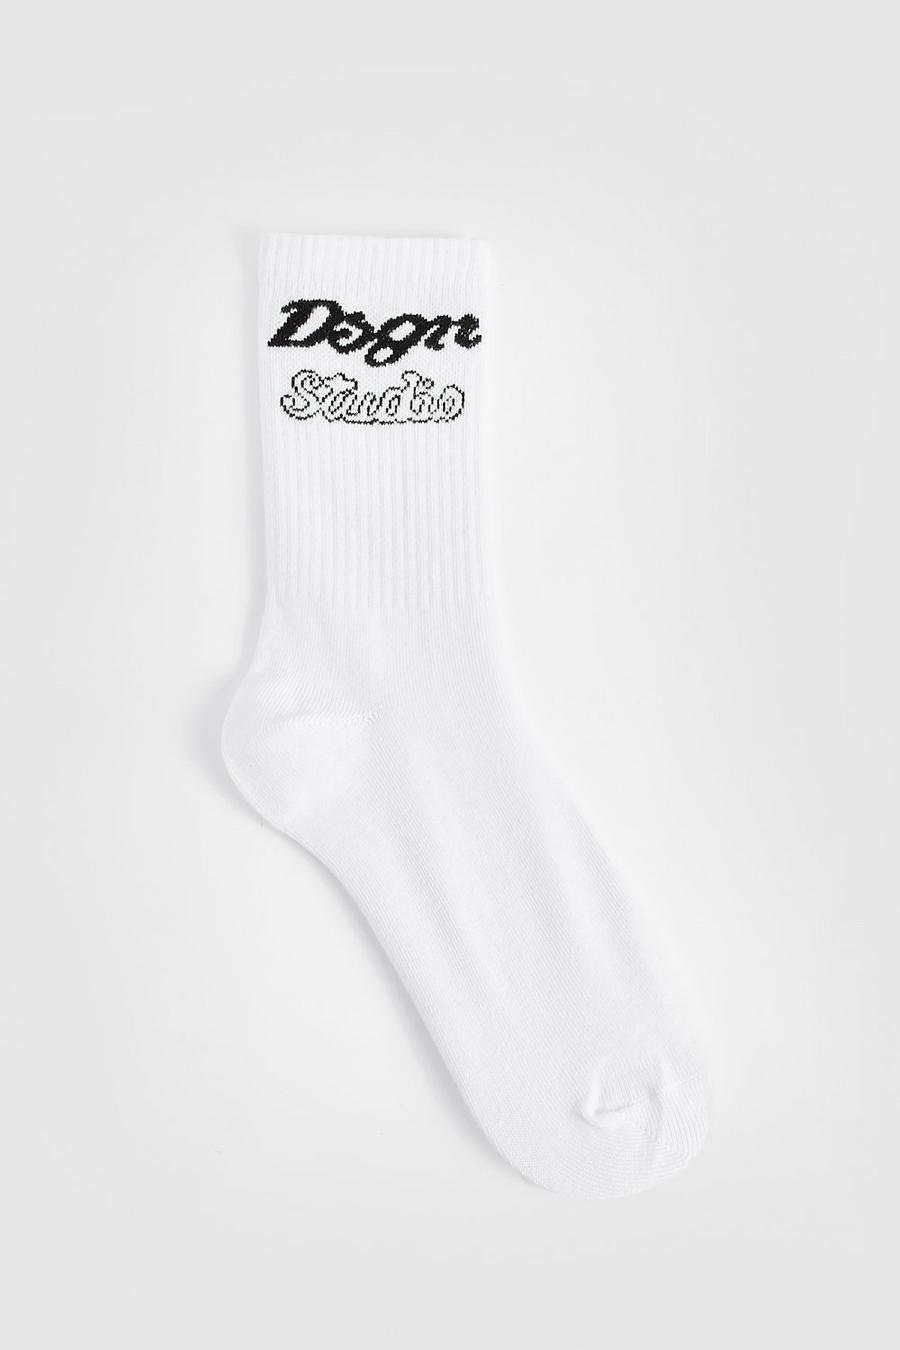 Single Mono Dsgn Studio Slogan Sports Sock